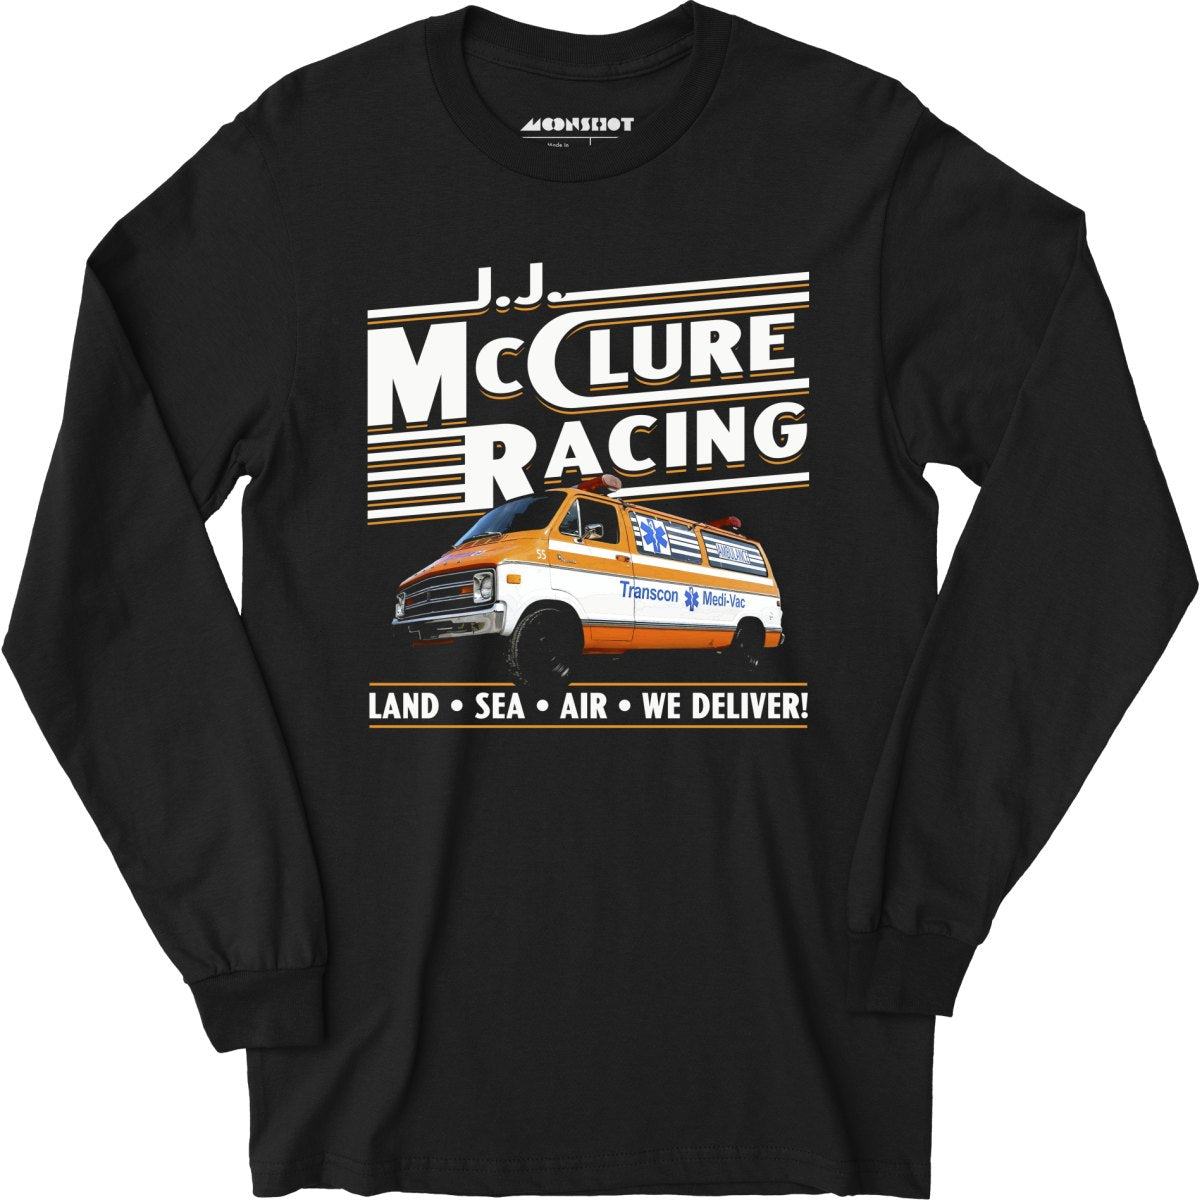 J.J. McClure Racing - Long Sleeve T-Shirt